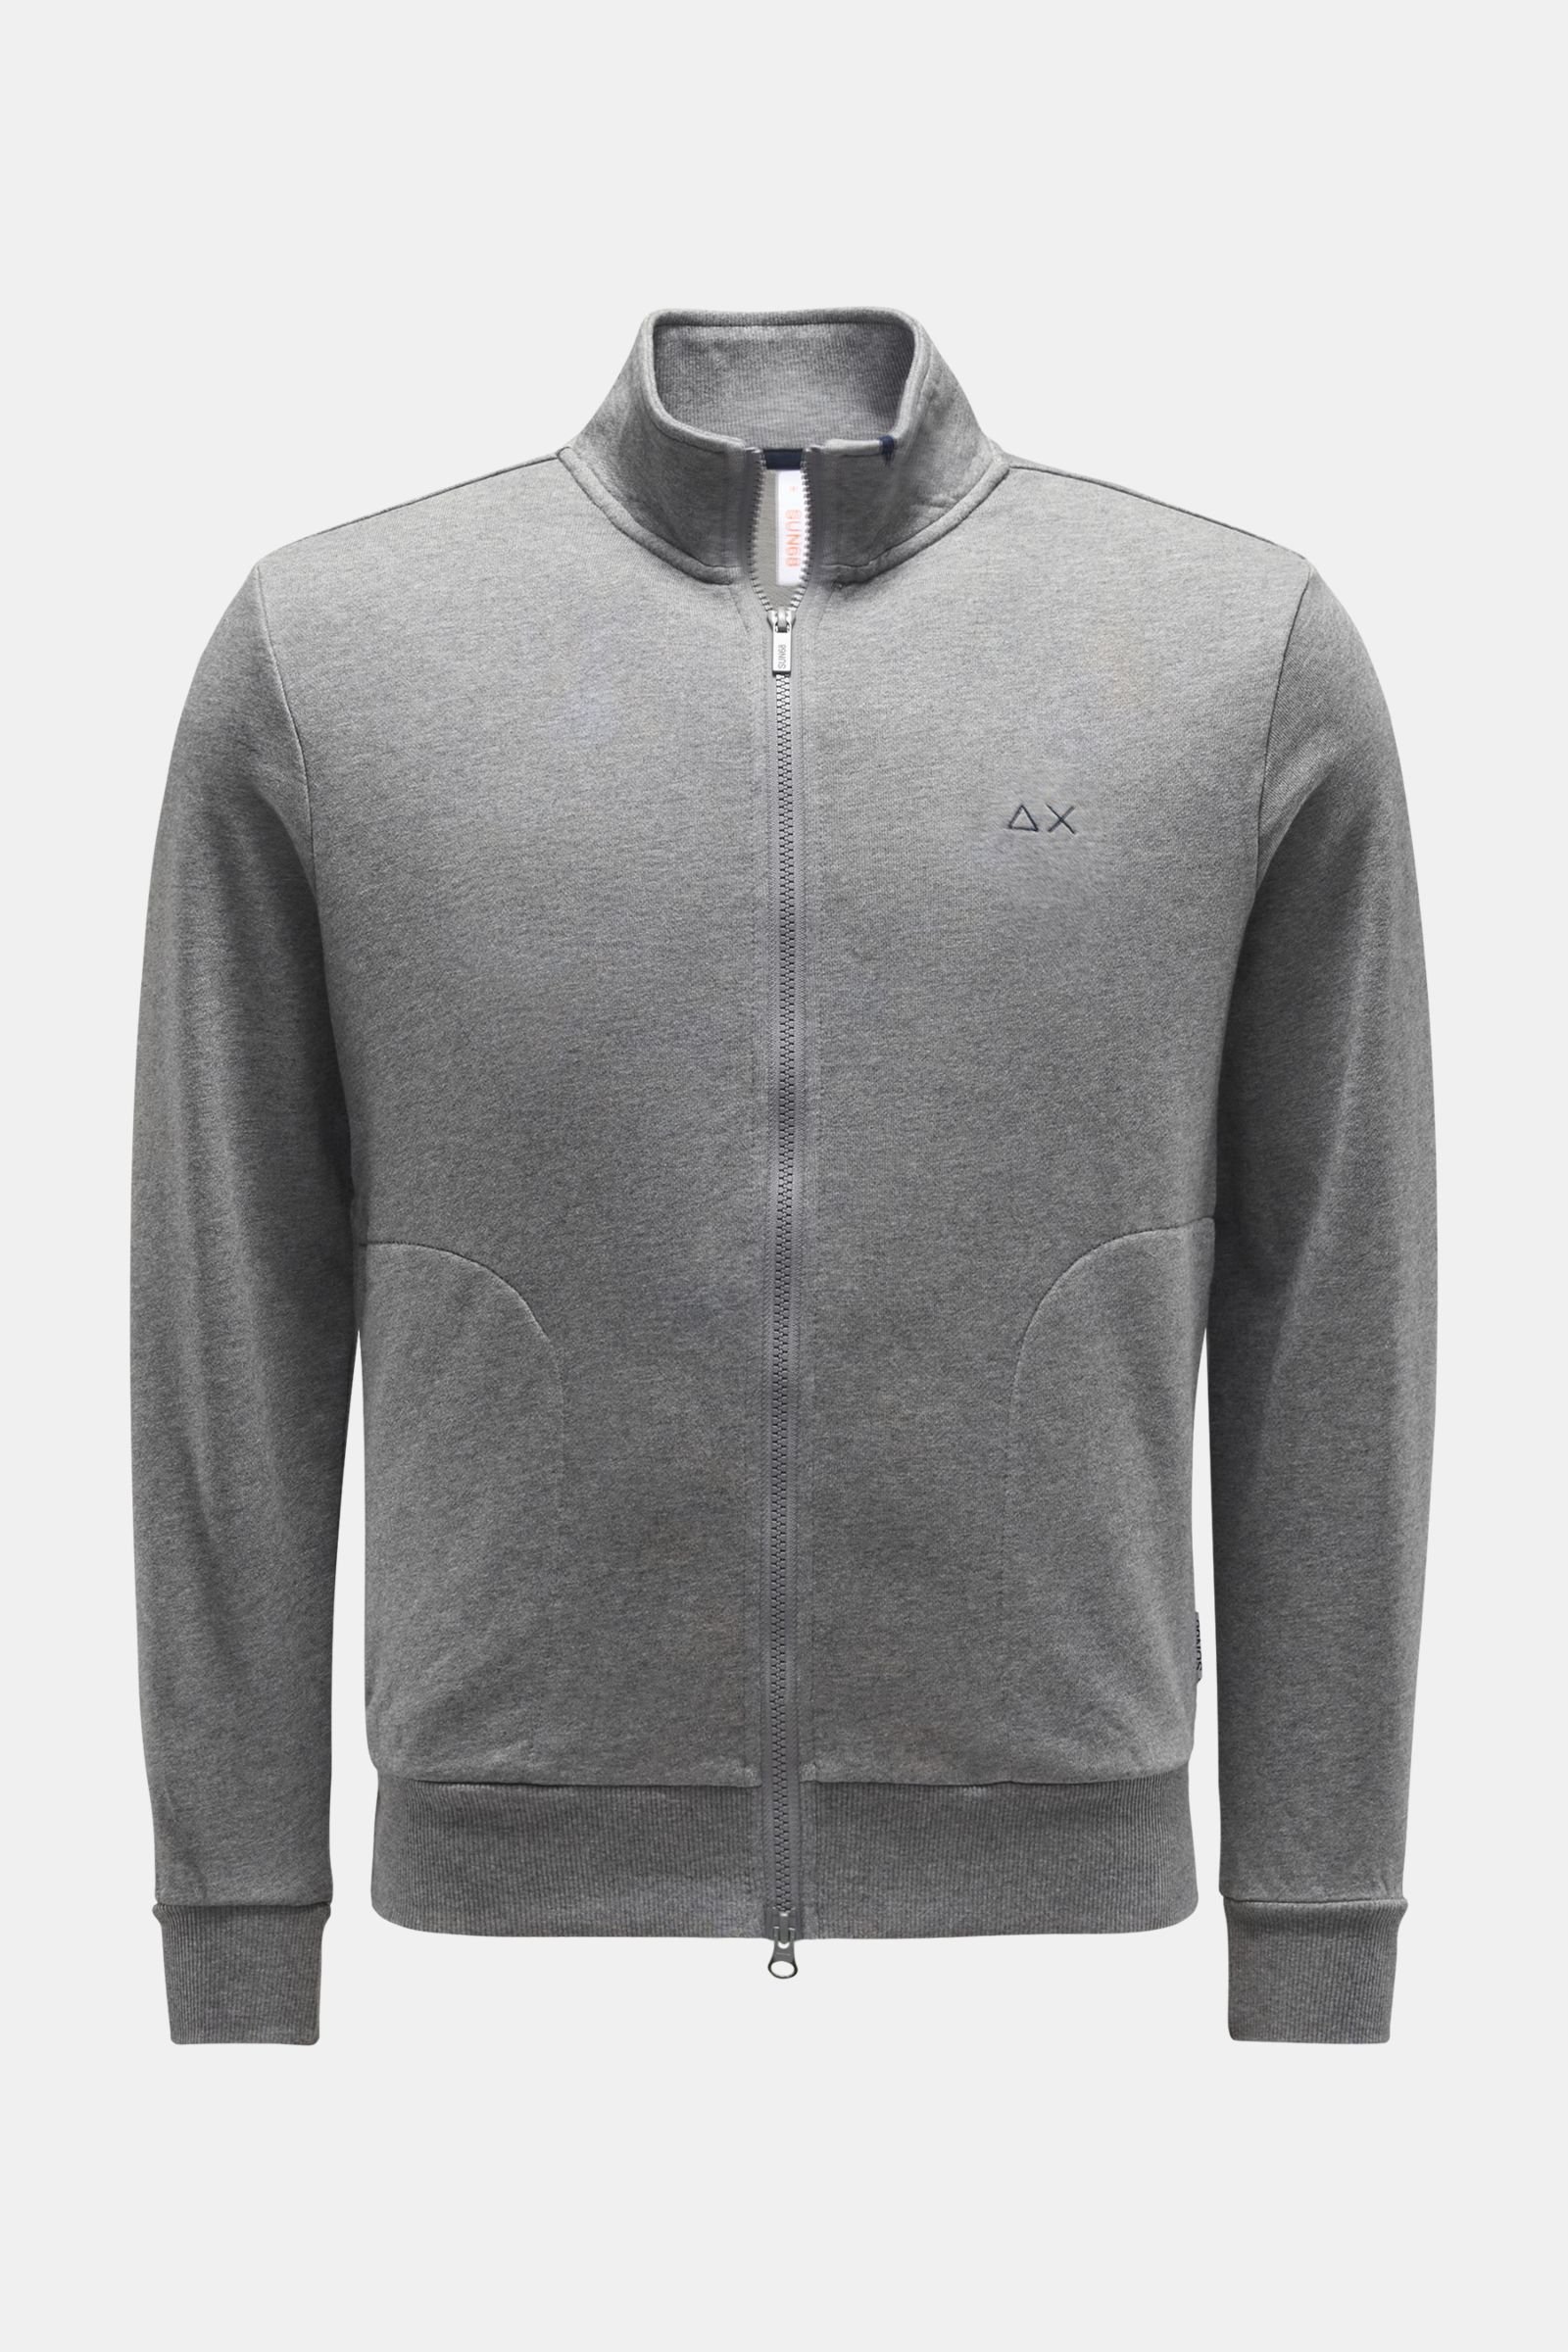 Sweat jacket grey